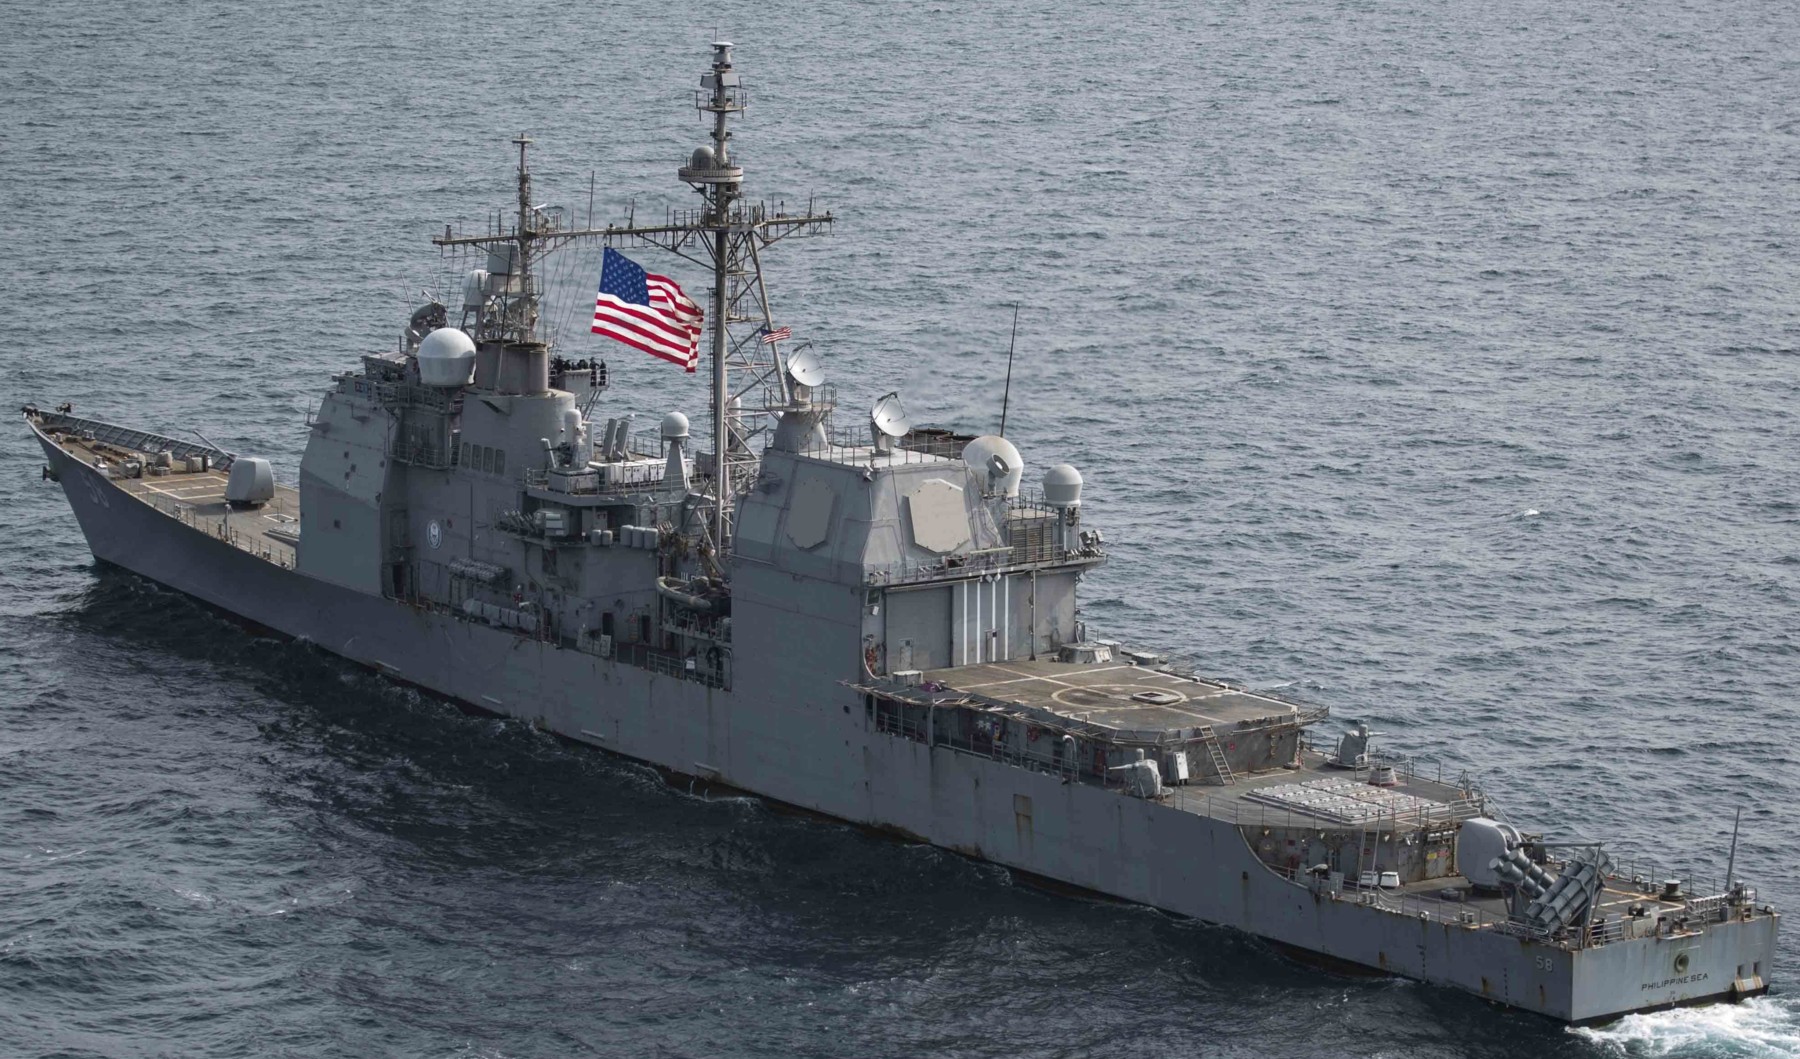 cg-58 uss philippine sea ticonderoga class guided missile cruiser aegis us navy arabian gulf 49